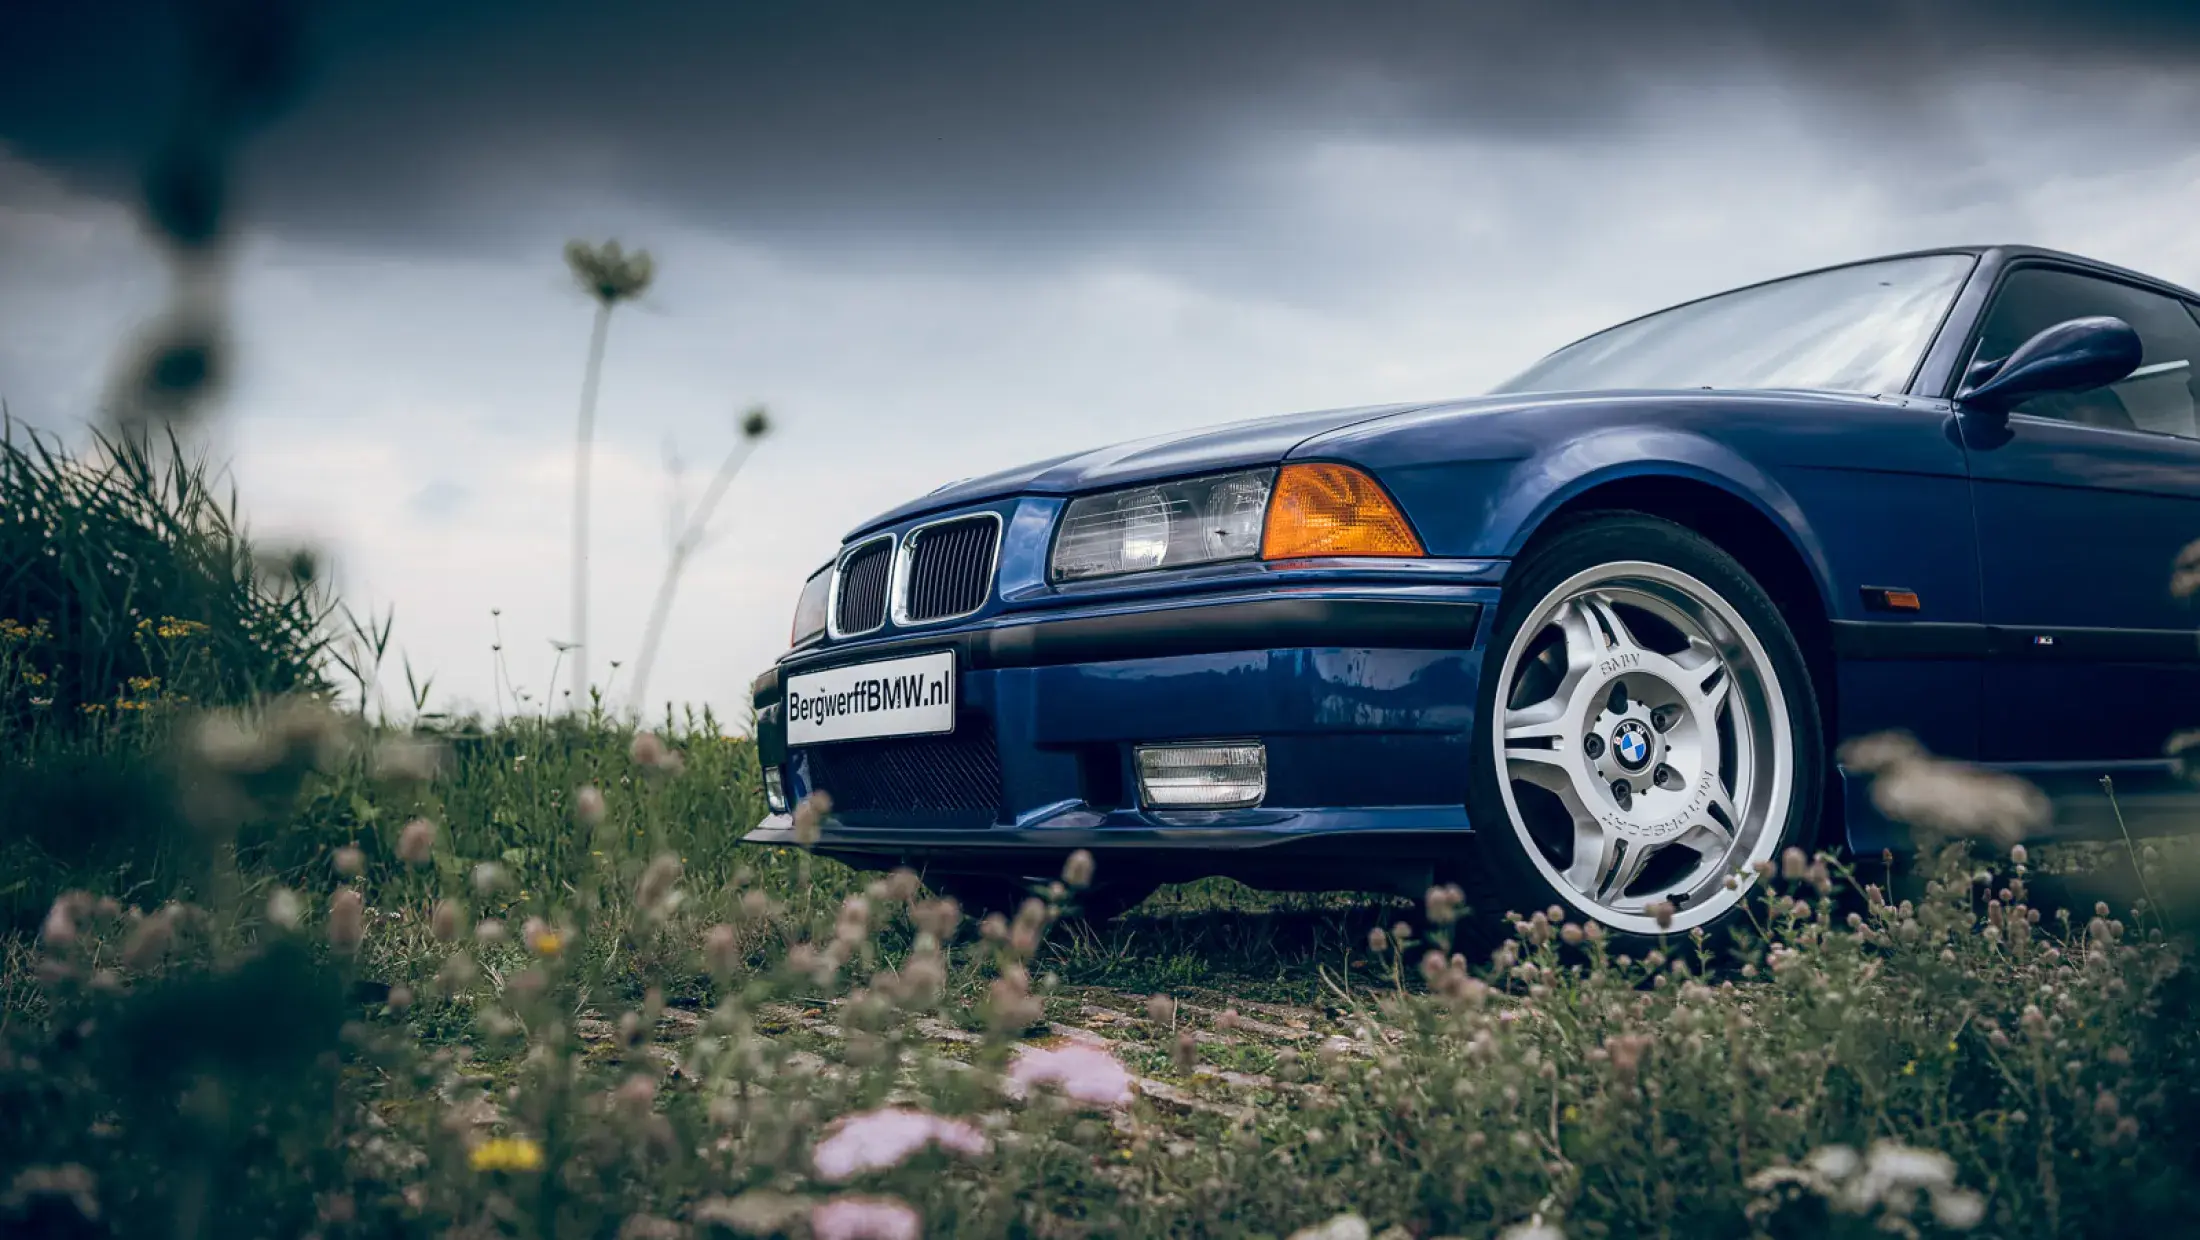 BMW E36 M3 Coupe Avus Blue Pearl Avusblau Metallic Sonderwunsch 1994 First Paint Classic